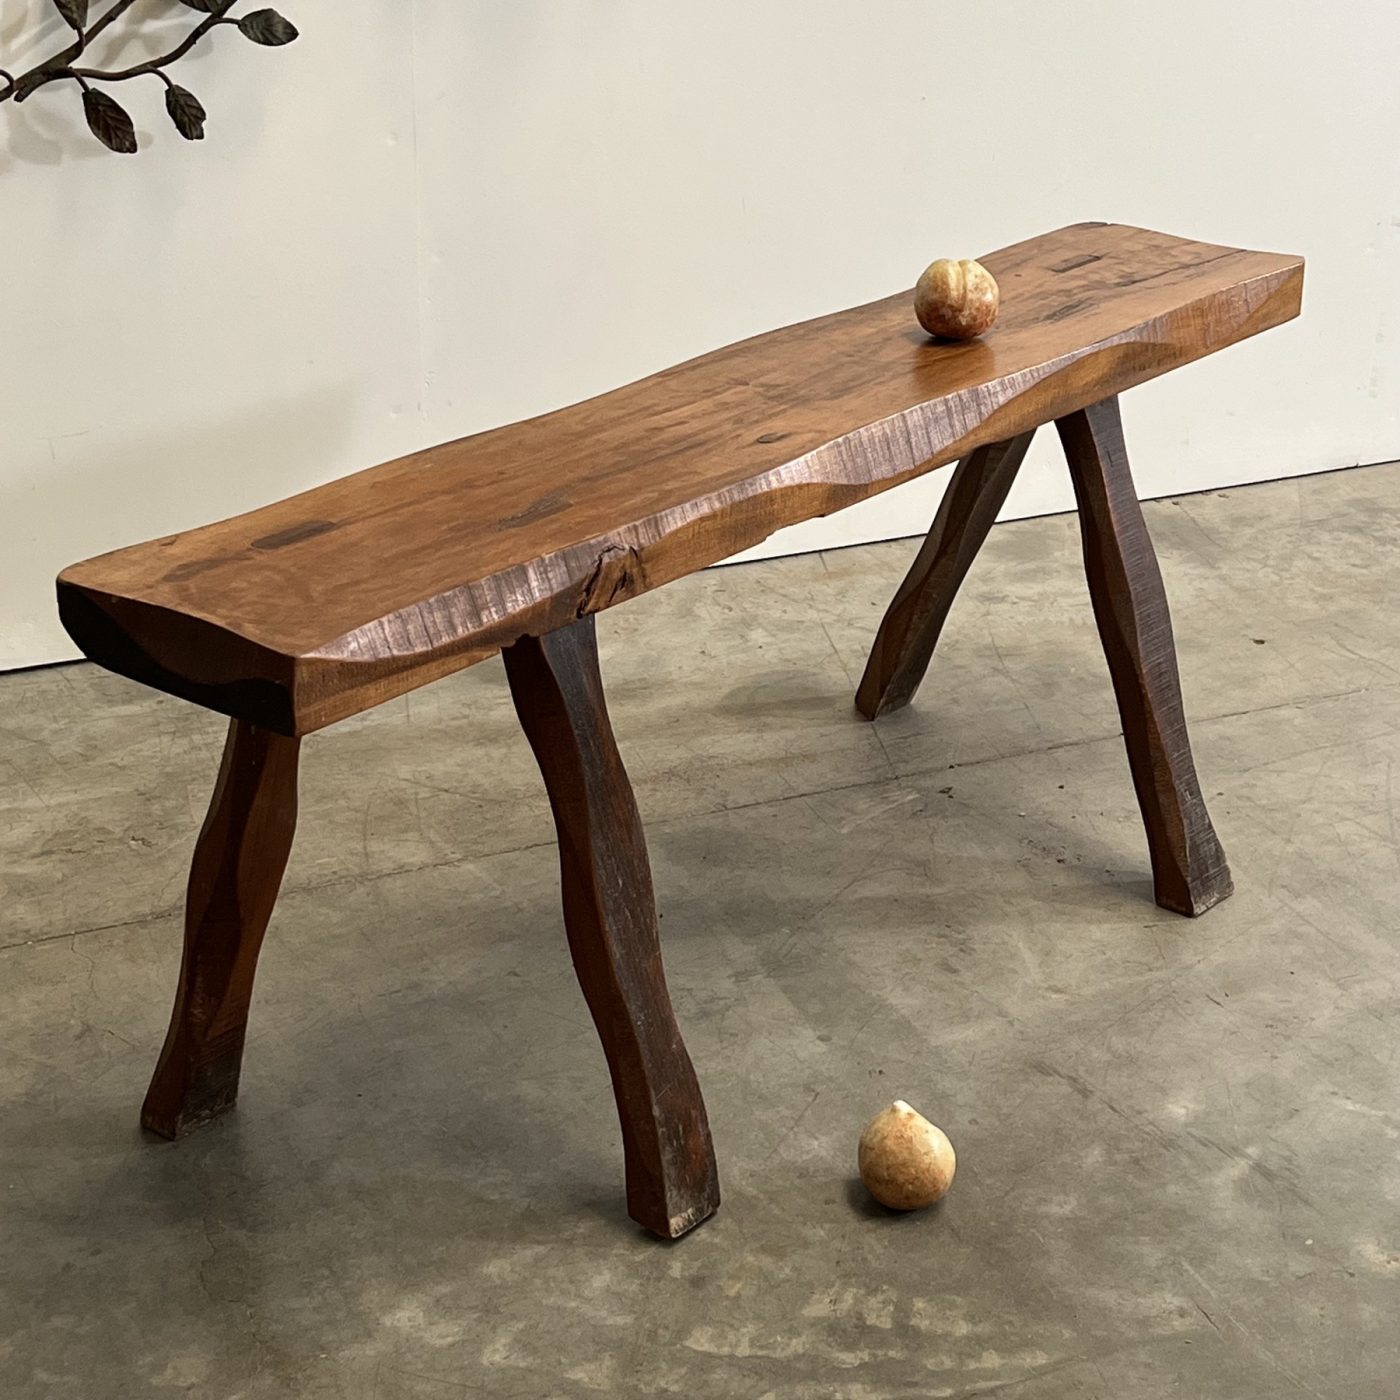 objet-vagabond-wooden-bench0006